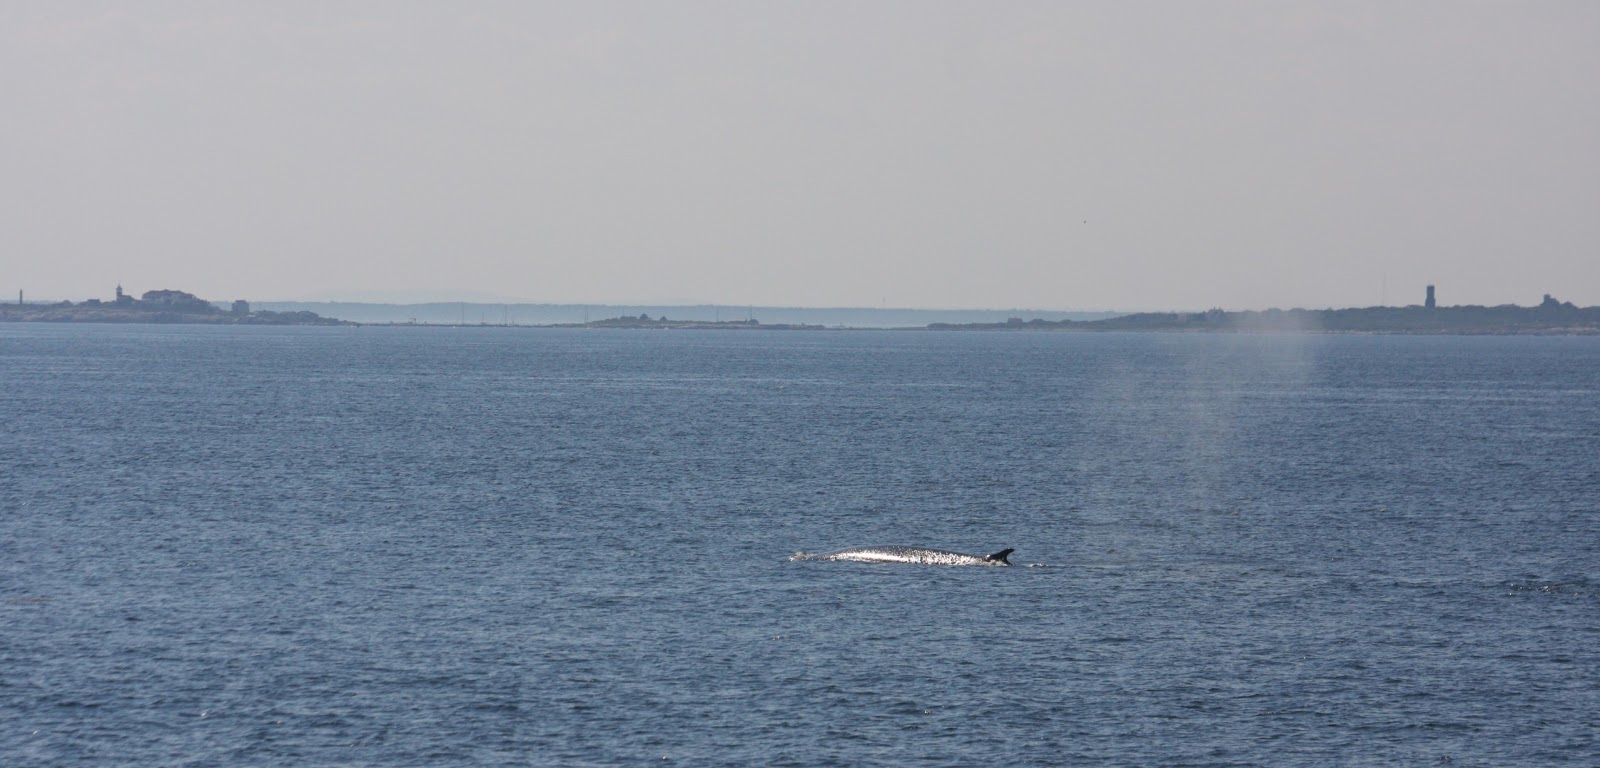 Blue Ocean Society's Whale Sightings July 15 Atlantic Queen